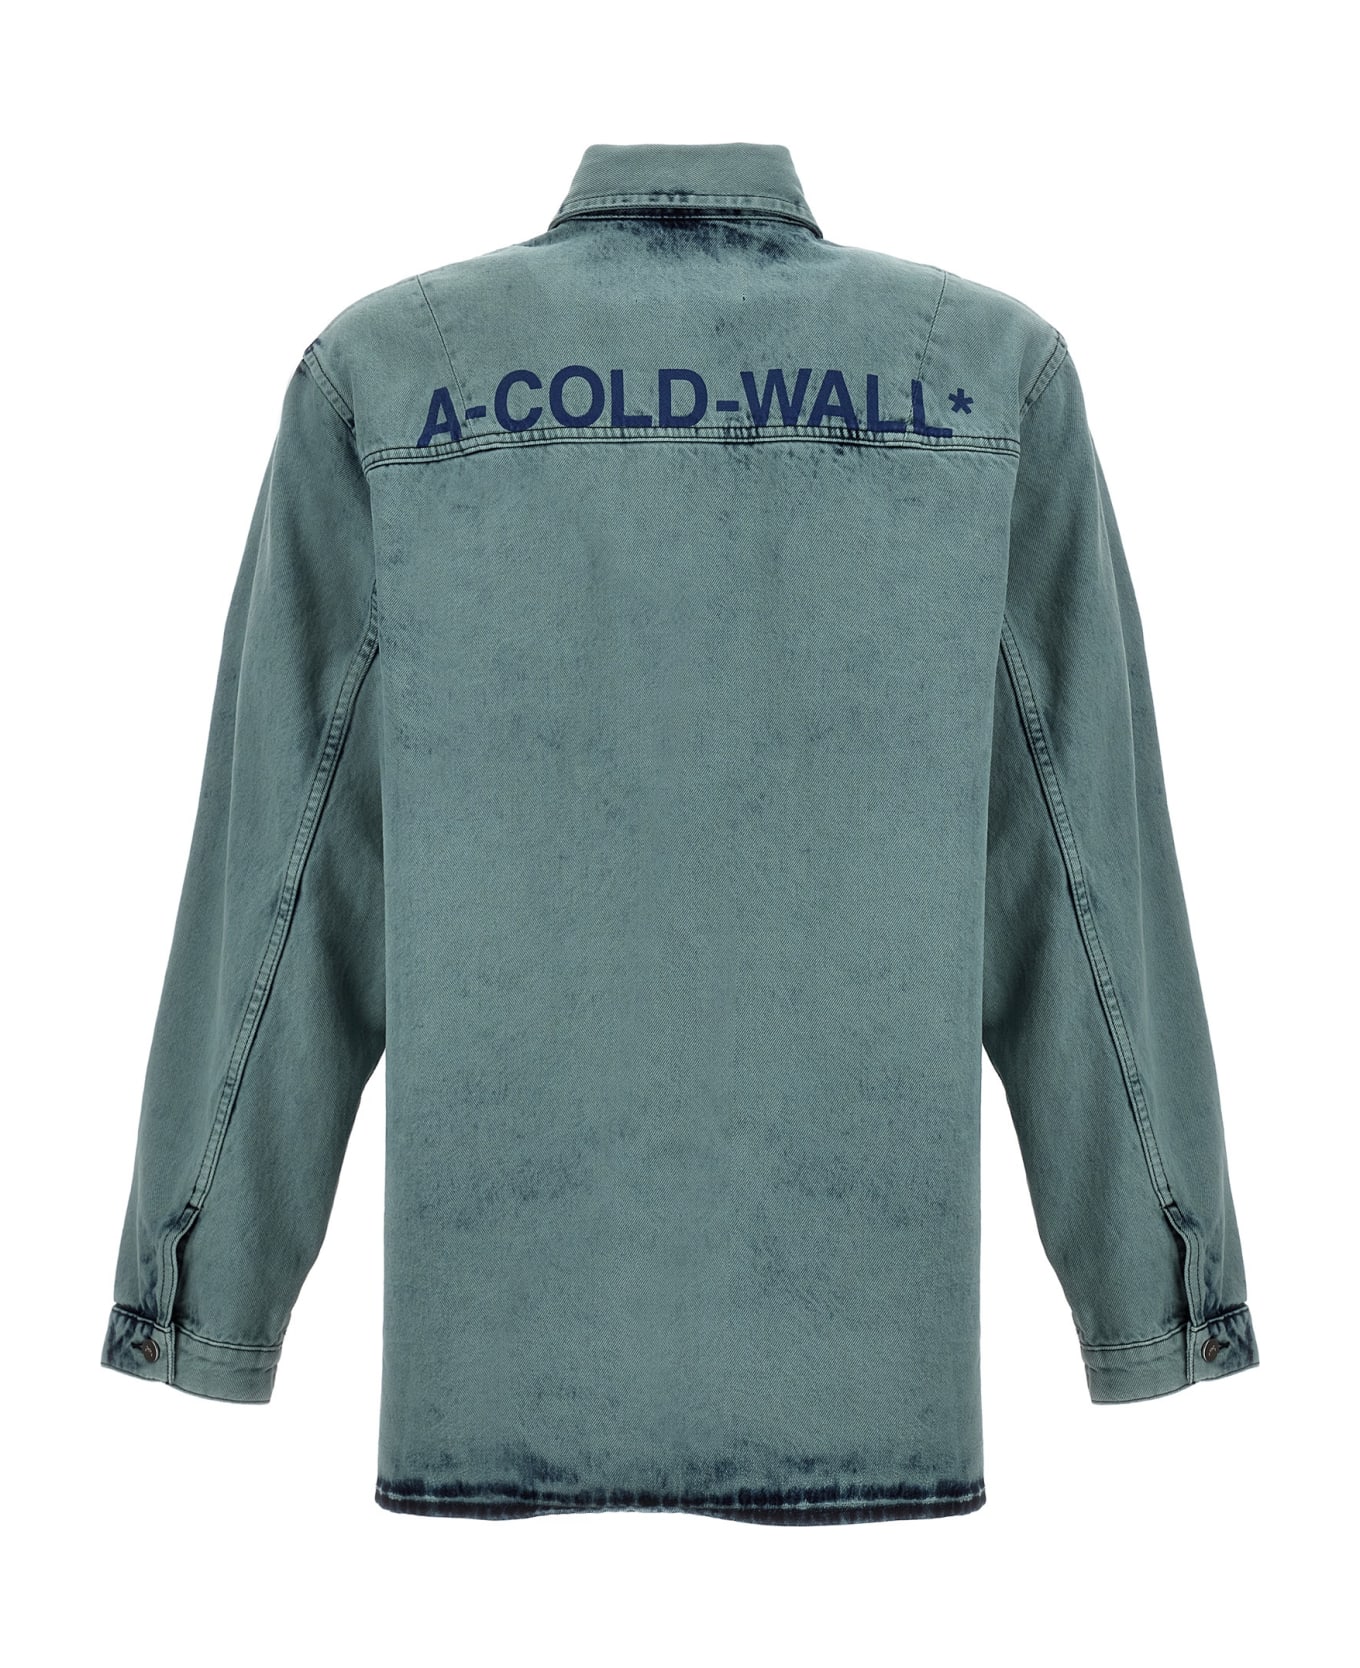 A-COLD-WALL 'bleached Overdyed' Shirt - Light Blue